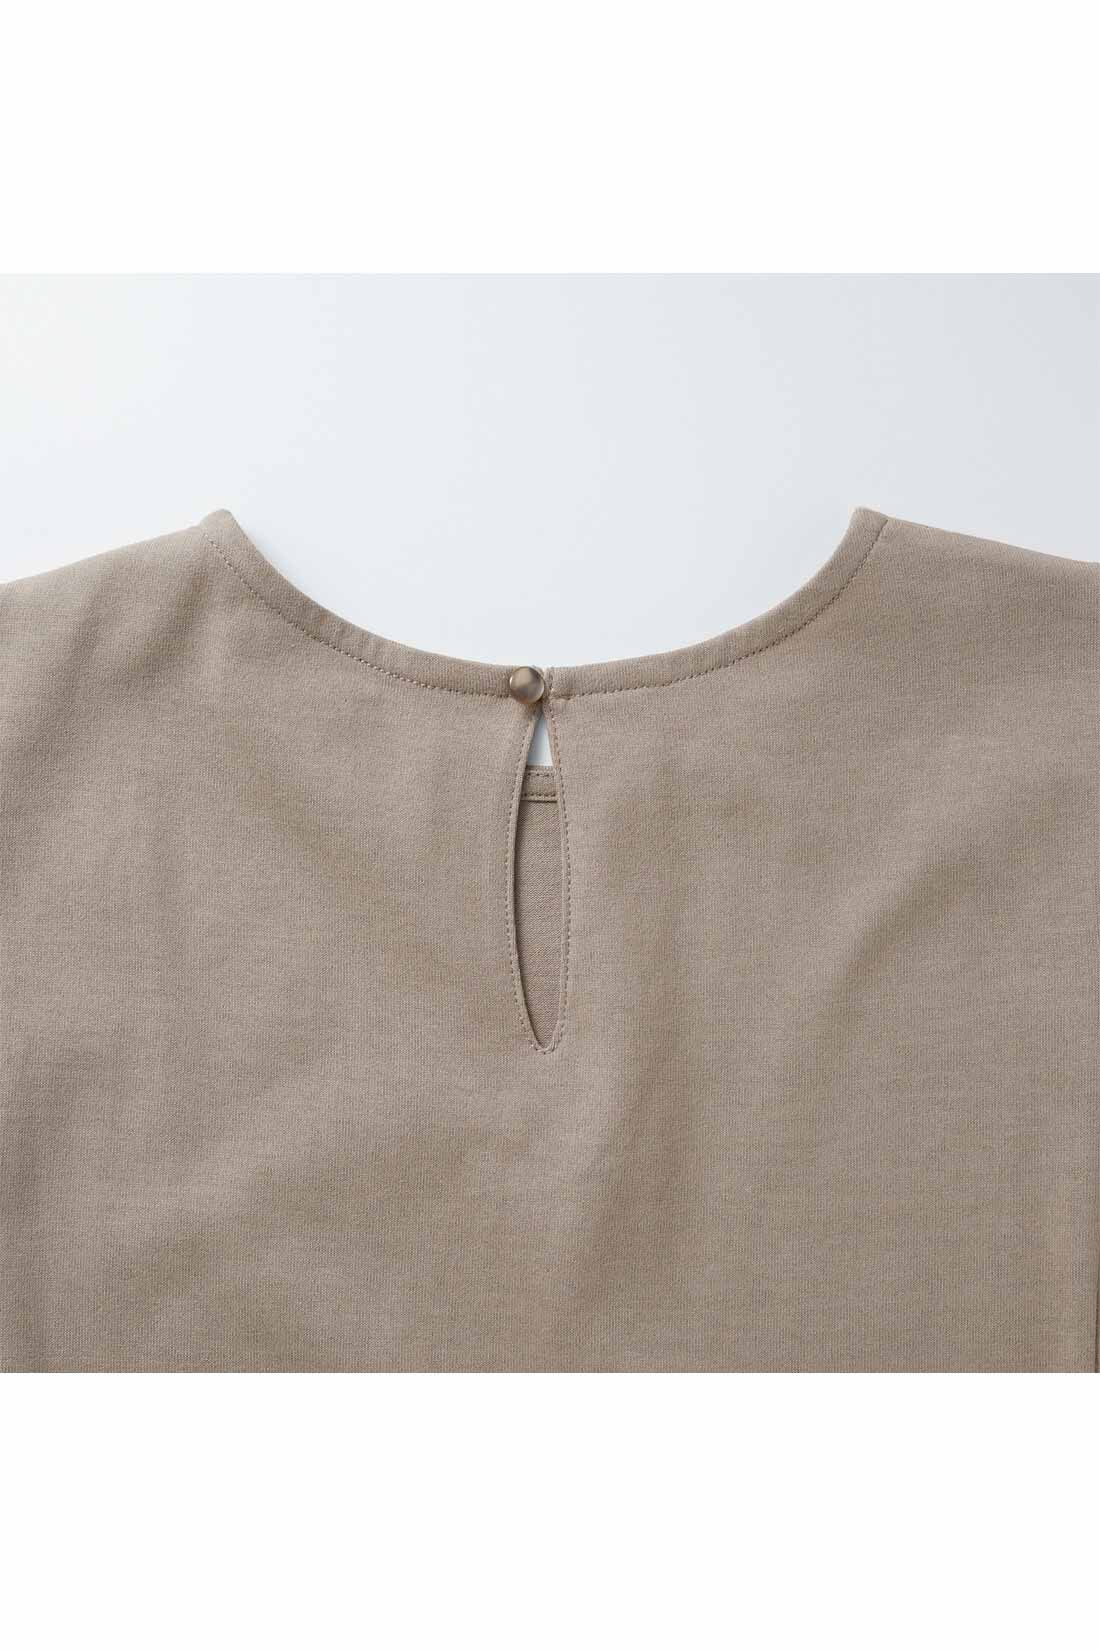 IEDIT|IEDIT[イディット]　汗じみ軽減加工をほどこした異素材遣いTシャツ〈グリーン〉|背中は涙開きで女らしく、着脱もすぽっとらくらく。